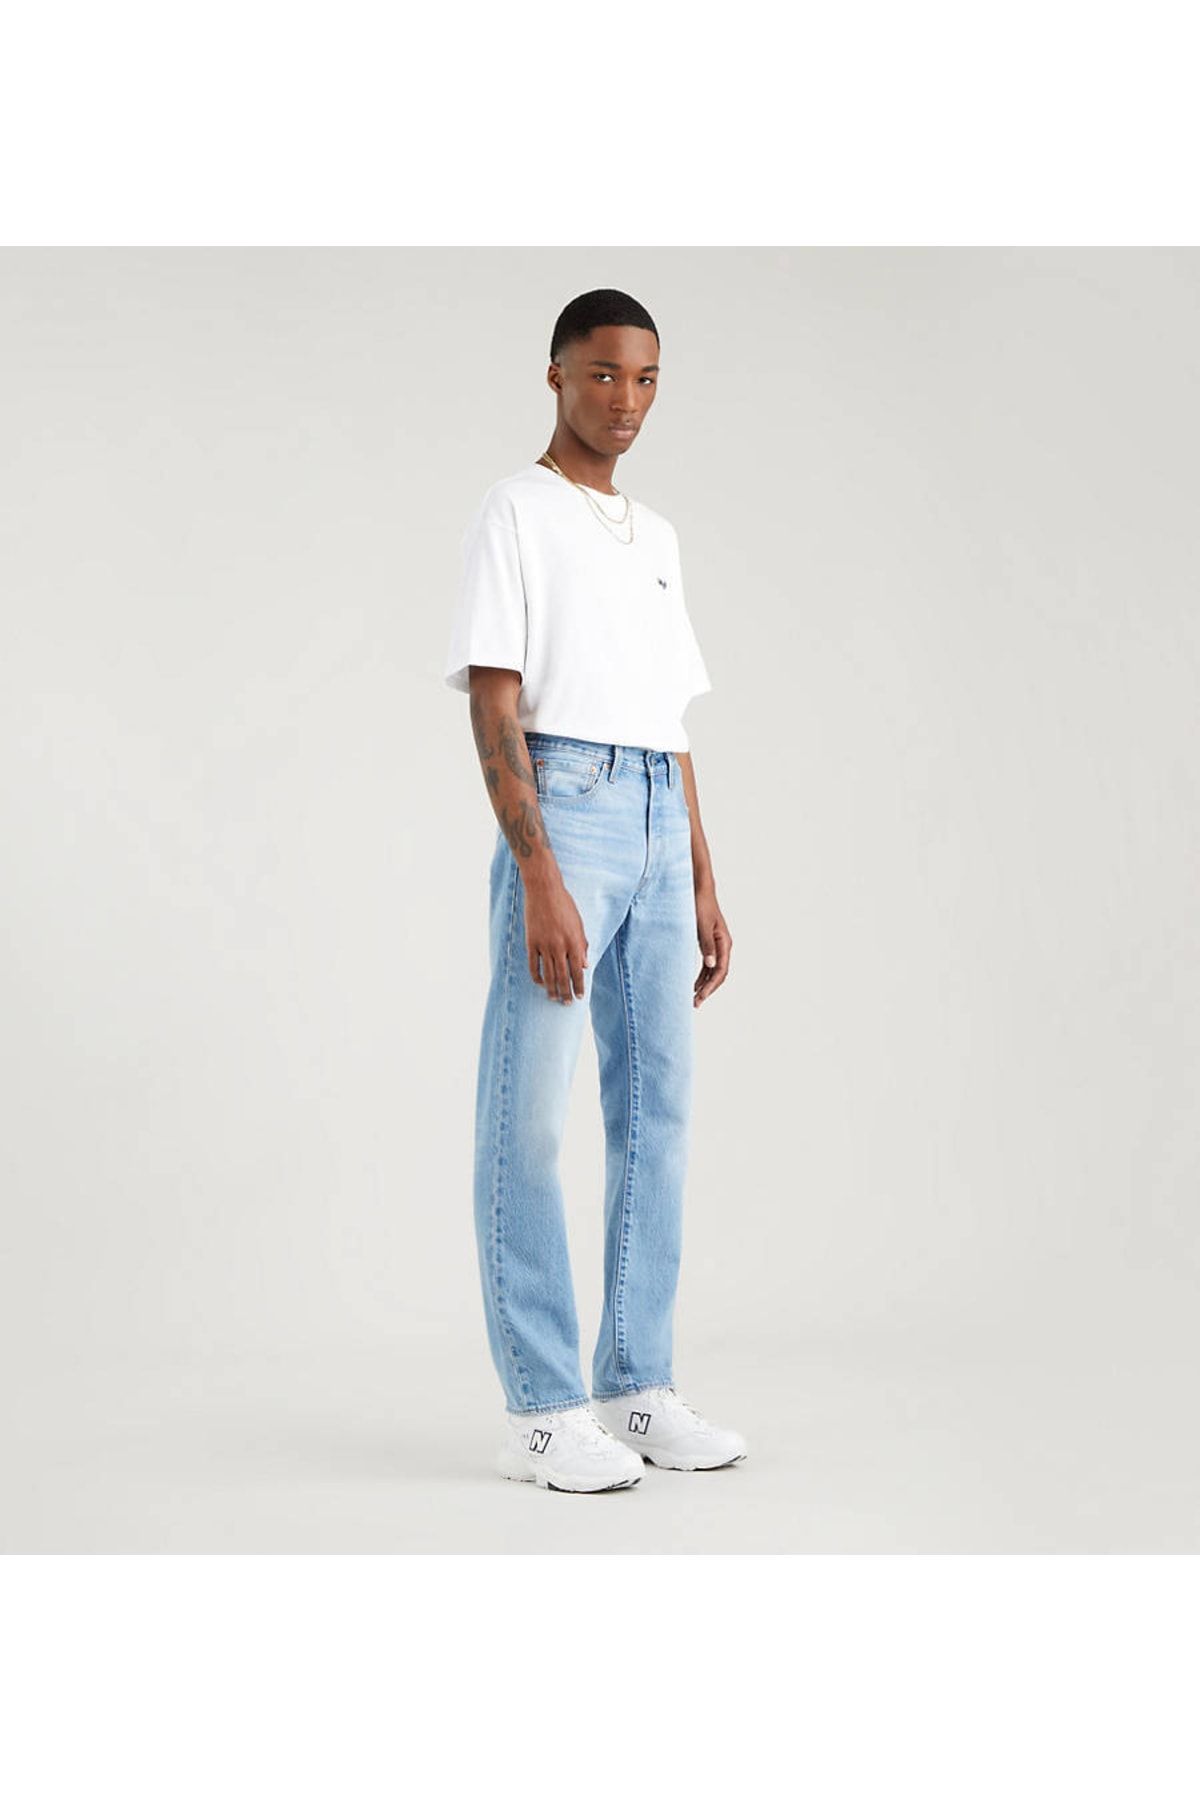 Levi's Jeans - Blue - Straight - Trendyol